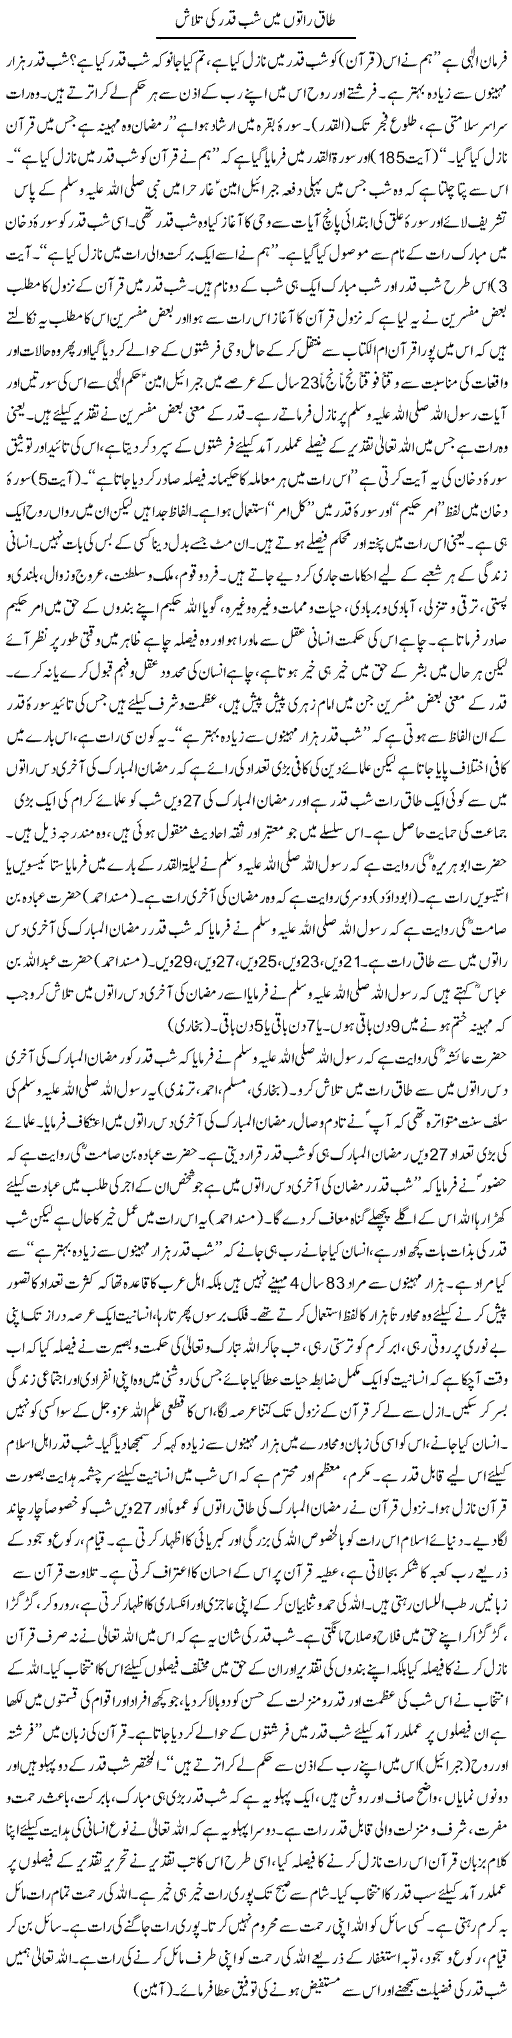 Taaq Raton Mein Shab Qader Ki Talaash | Dr. Muhammad Tayyab Khan Singhanvi | Daily Urdu Columns